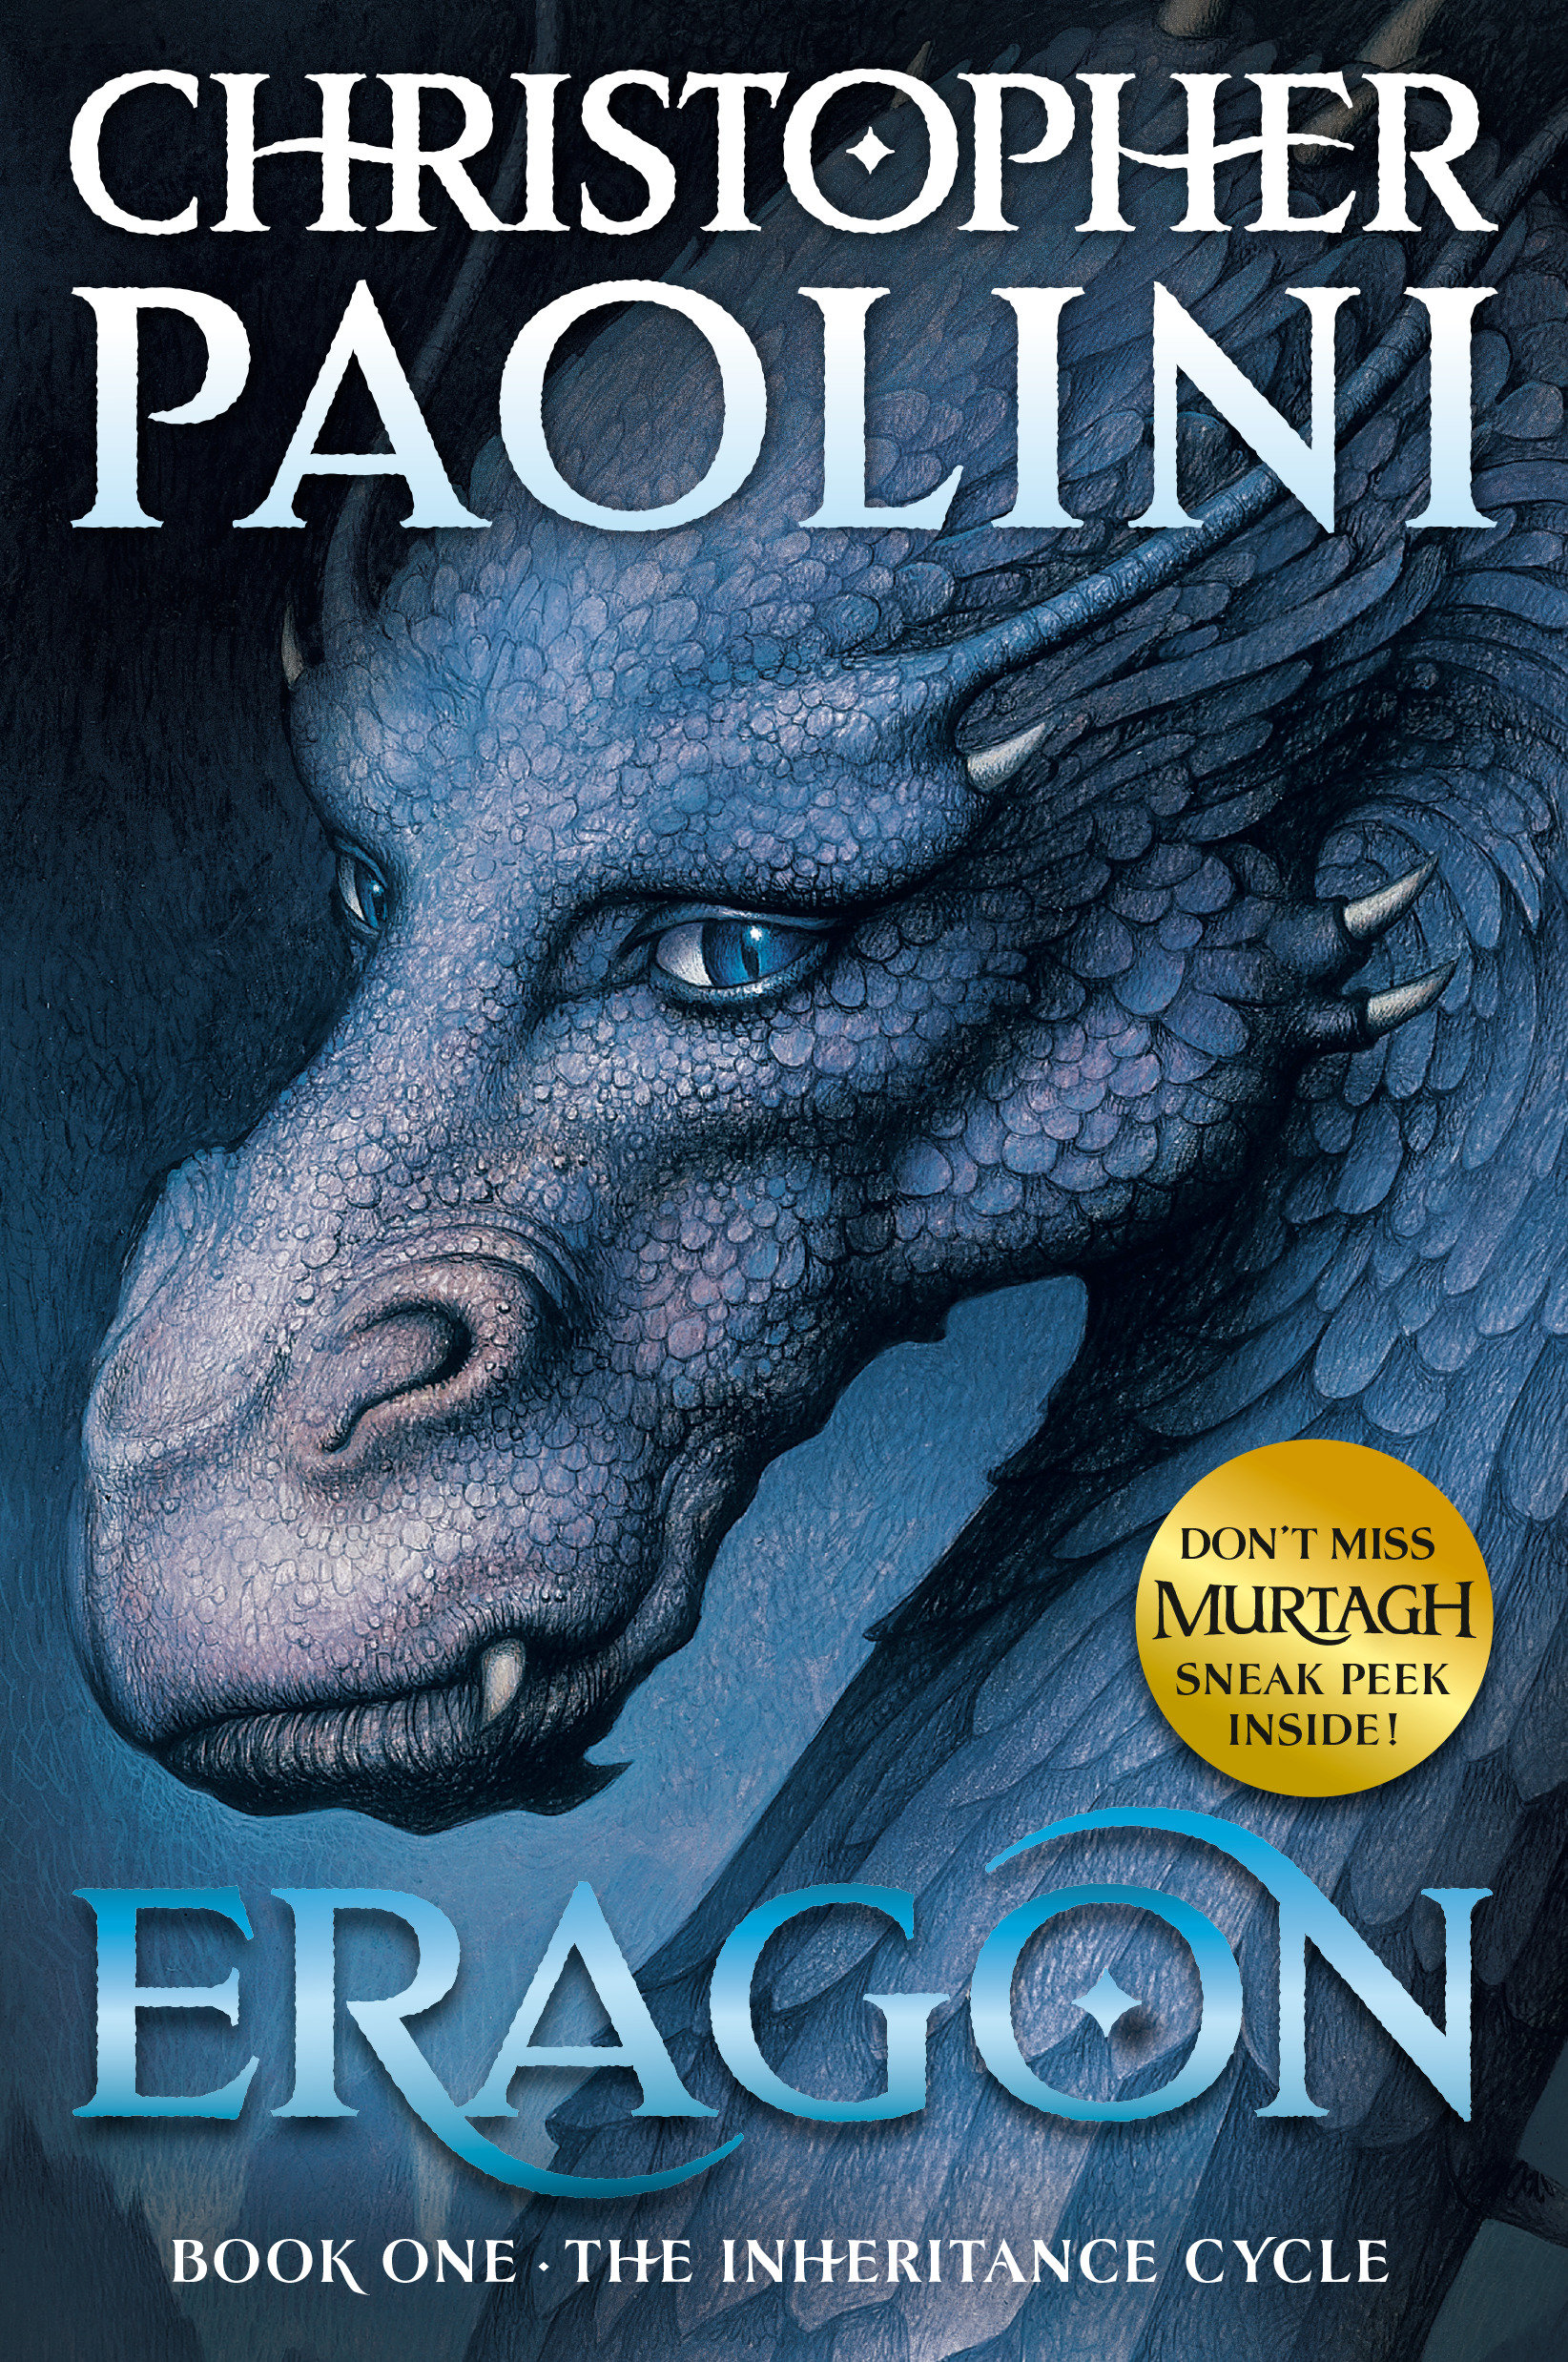 Eragon cover image